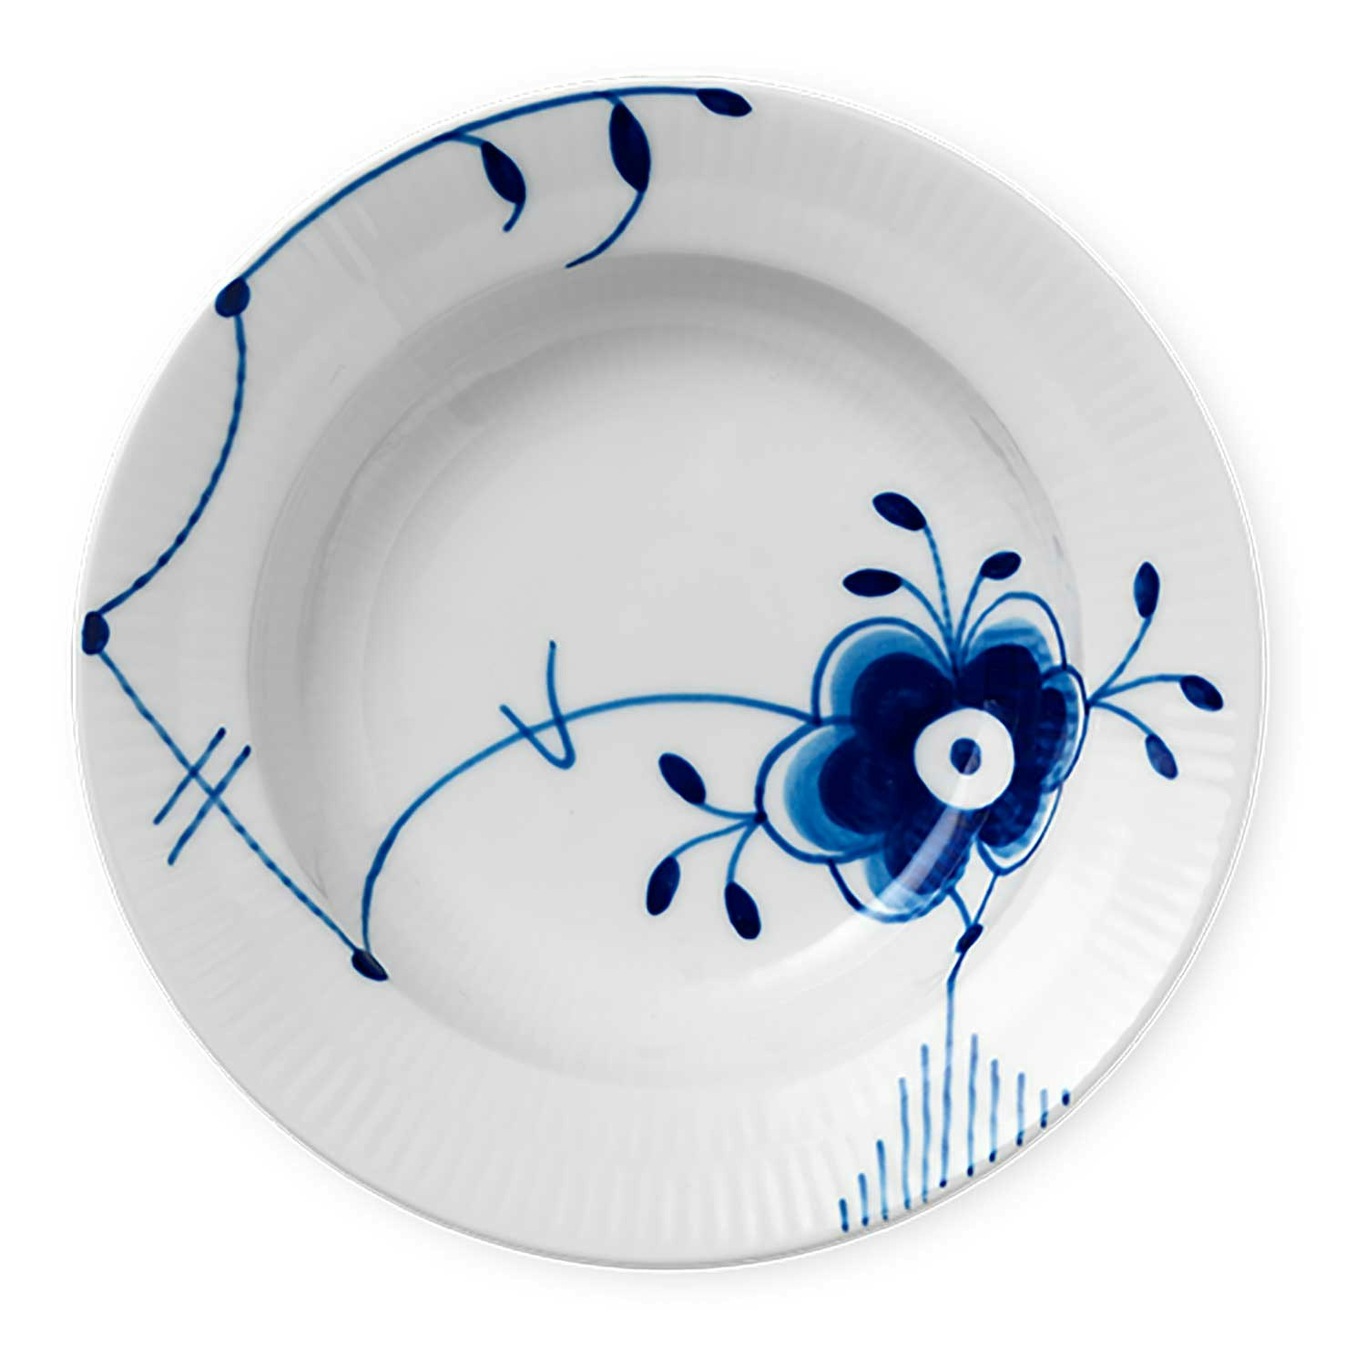 https://royaldesign.com/image/2/royal-copenhagen-blue-fluted-mega-deep-plate-3?w=800&quality=80